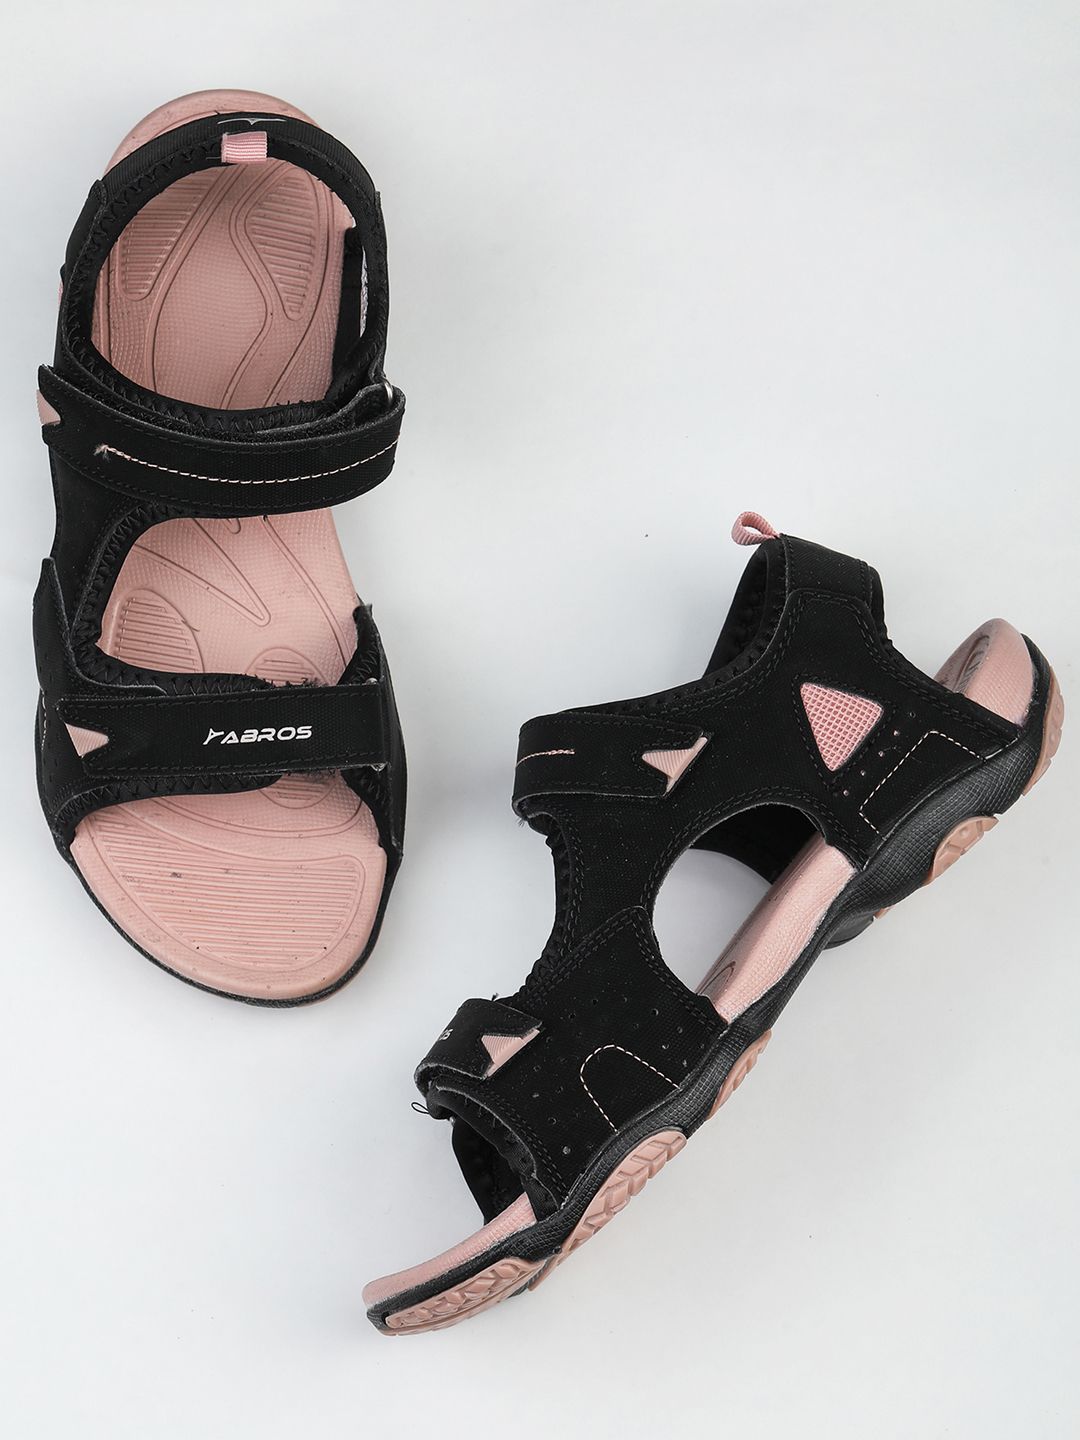 ABROS Women Black & Peach-Colored Sports Sandals Price in India